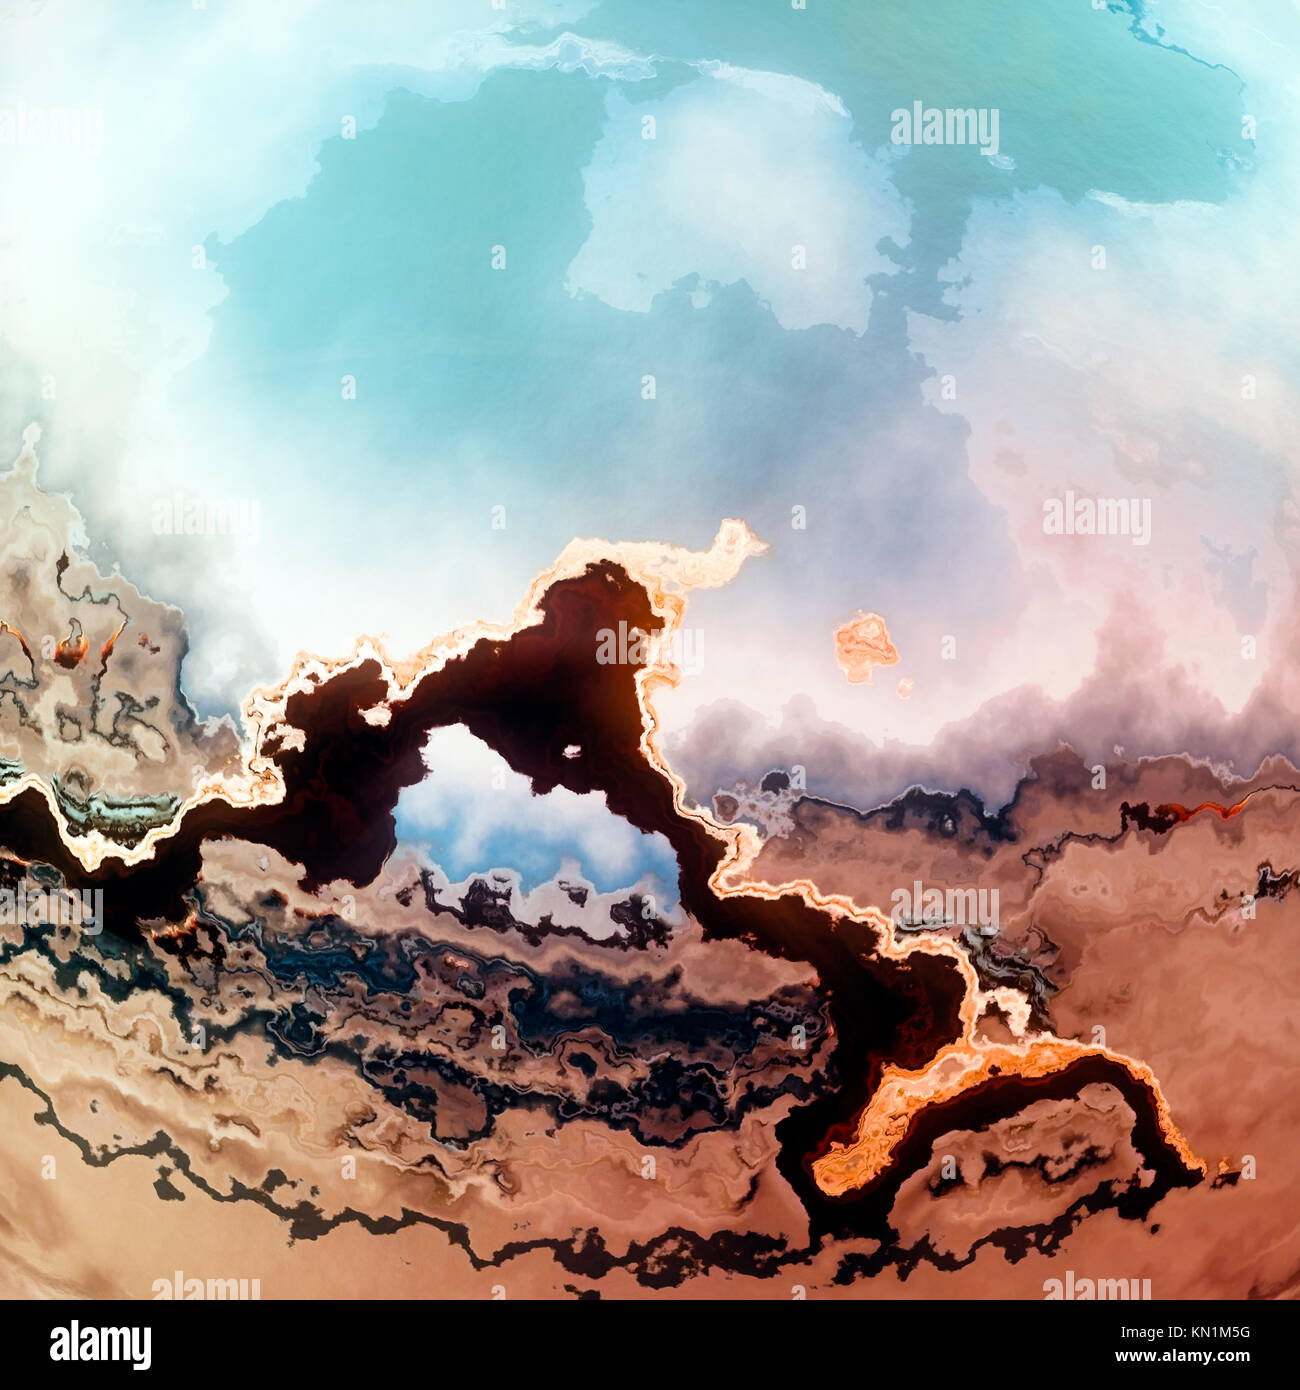 Volcanic desert lake fantasy landscape vision, abstract background illustration Stock Photo